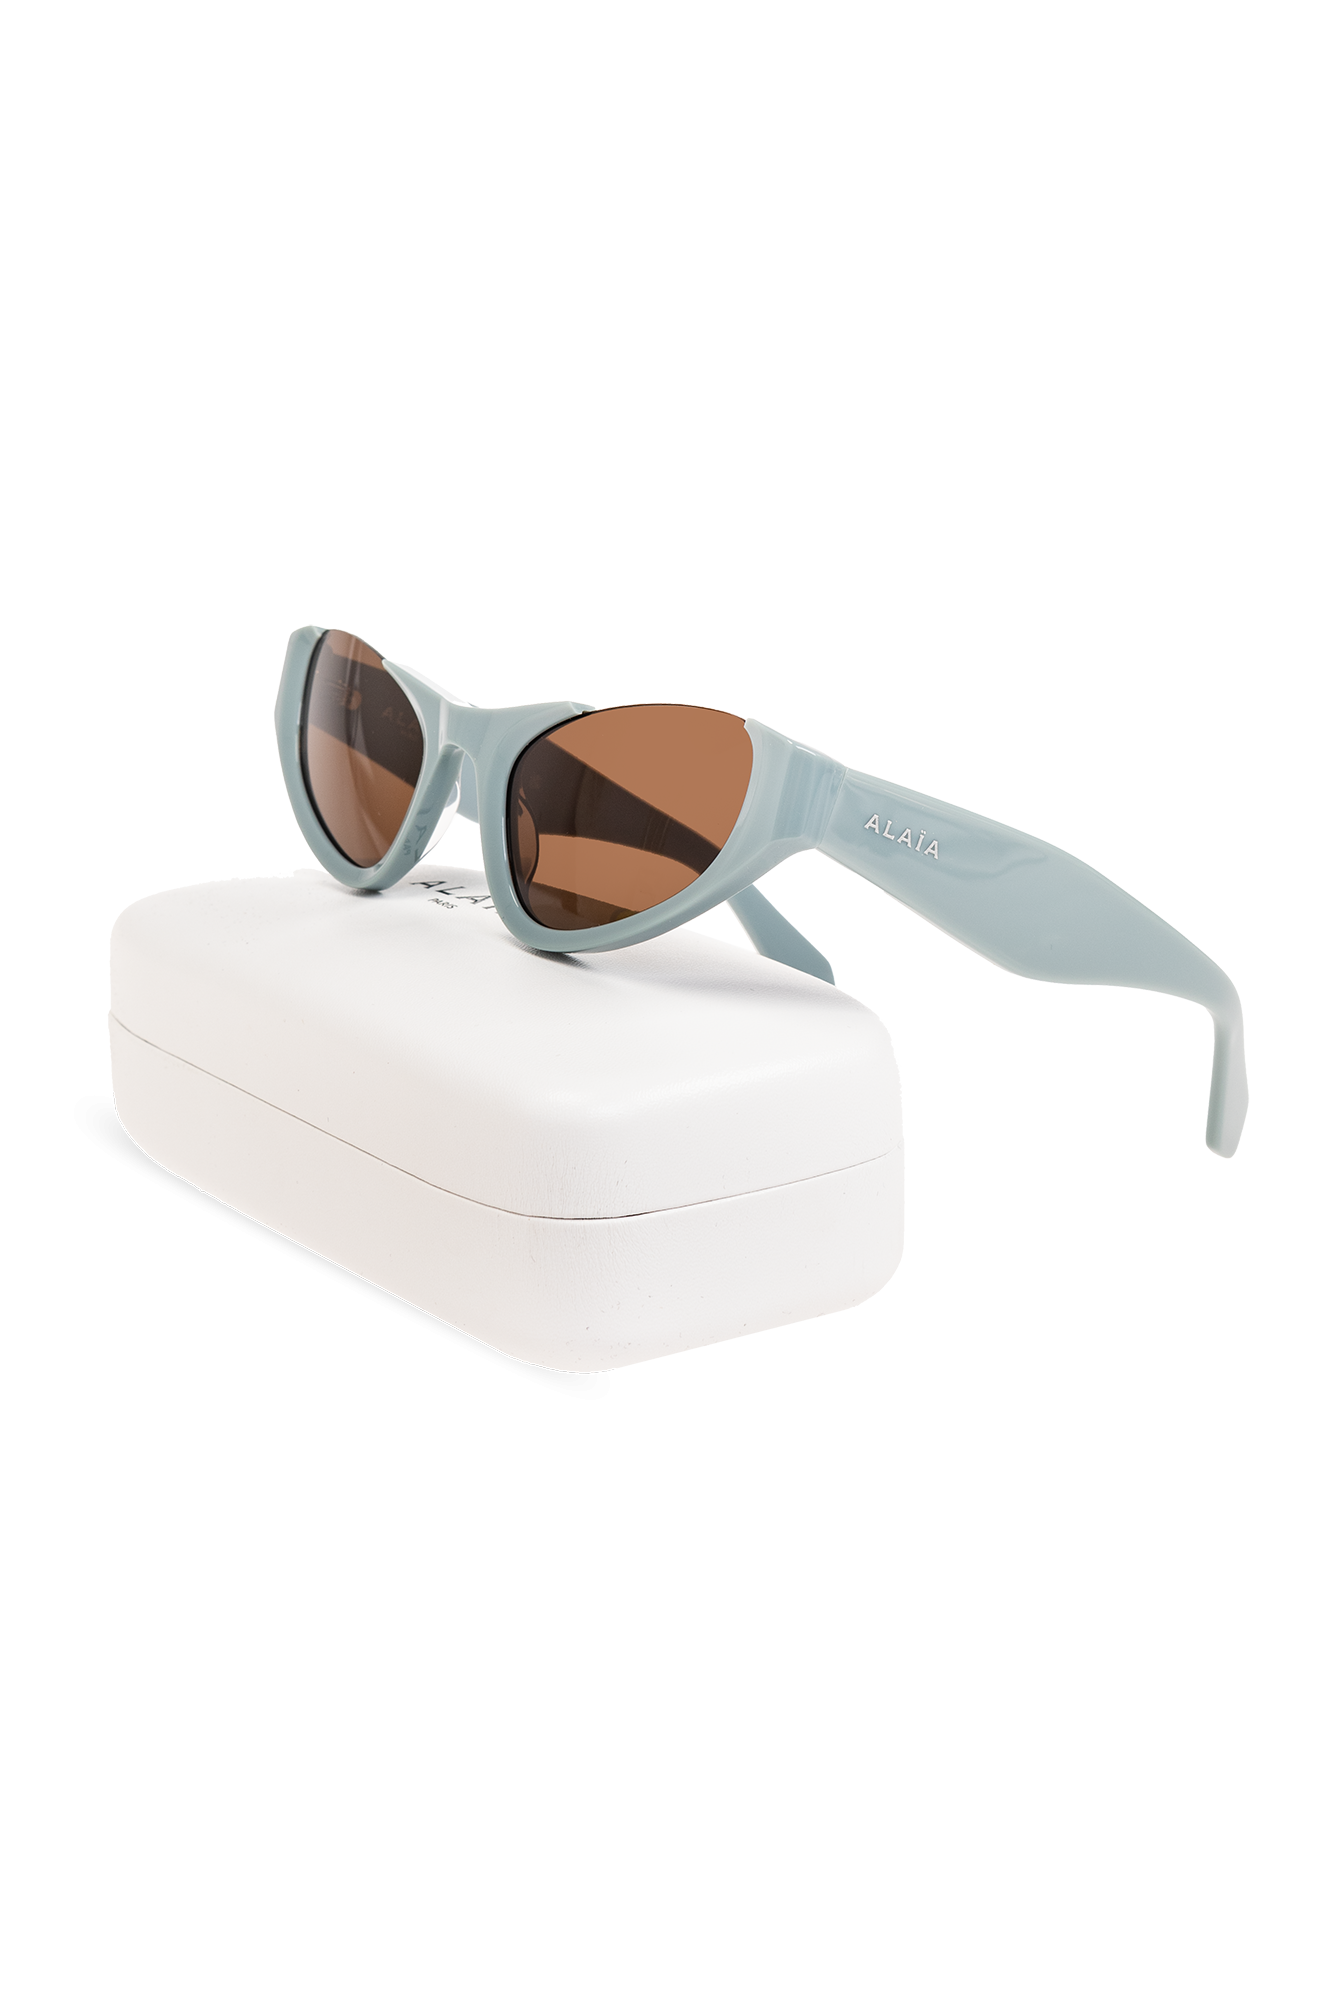 Alaïa sunglasses Braun with logo